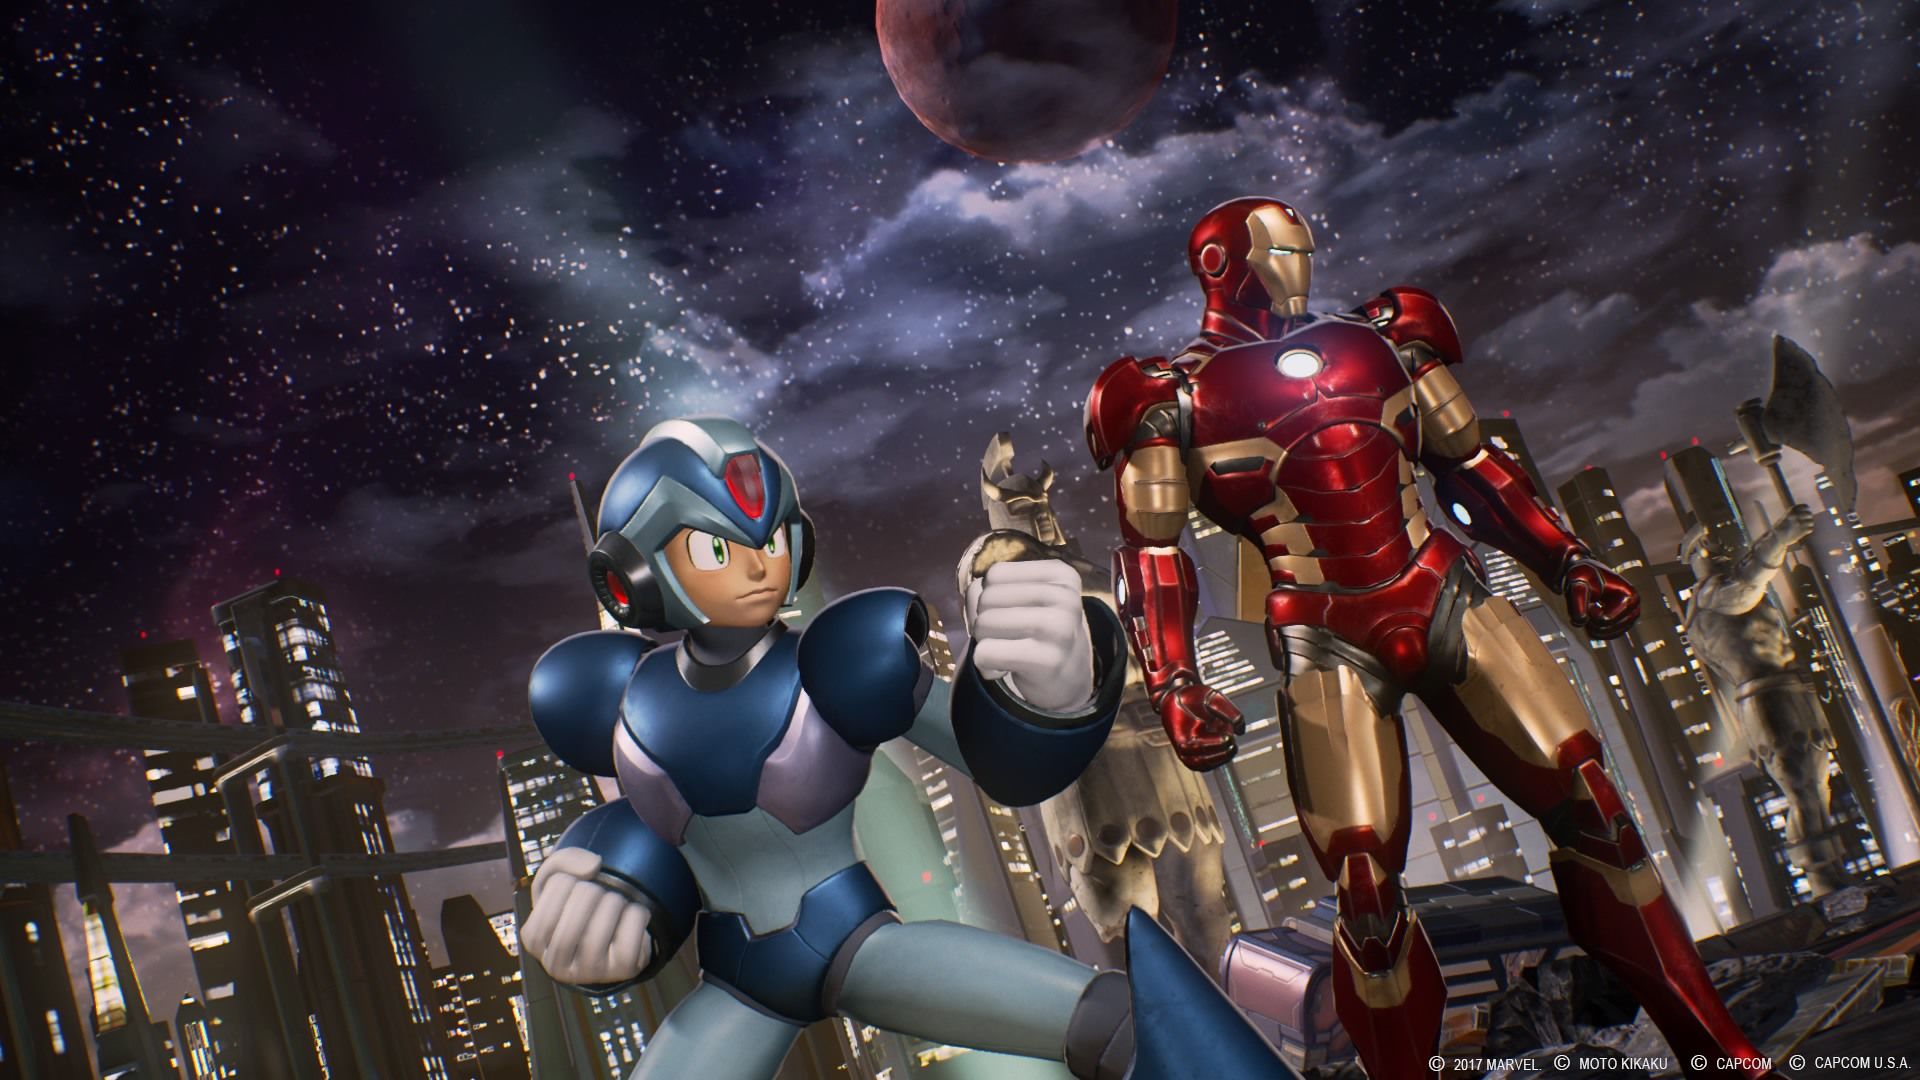 Cool Mega Man And Iron Marvel Vs Infinite Wallpaper